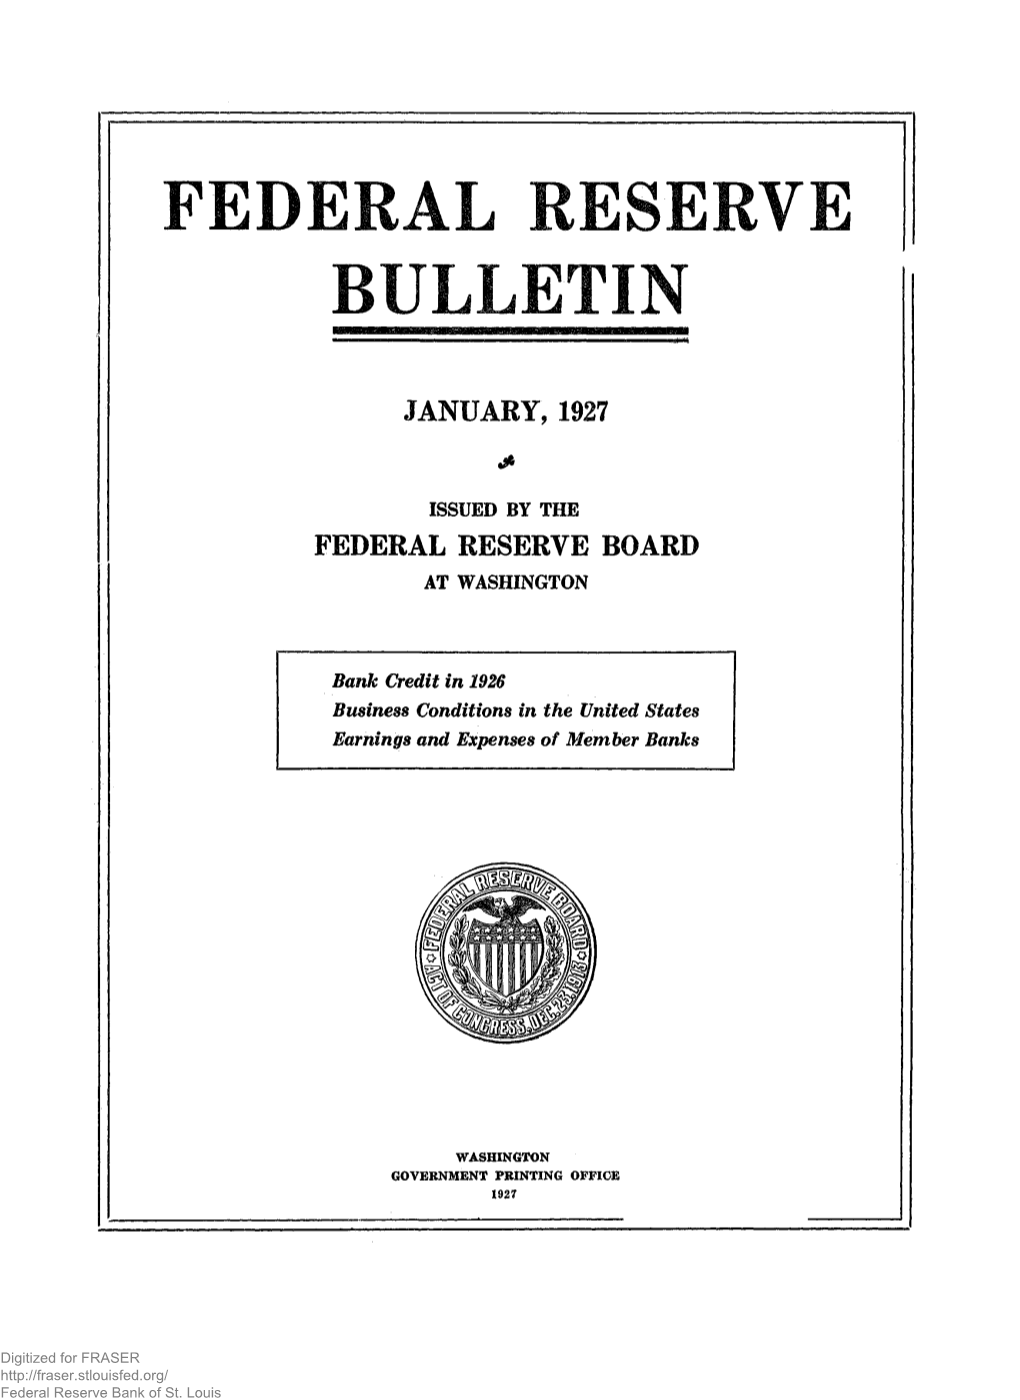 Federal Reserve Bulletin January 1927